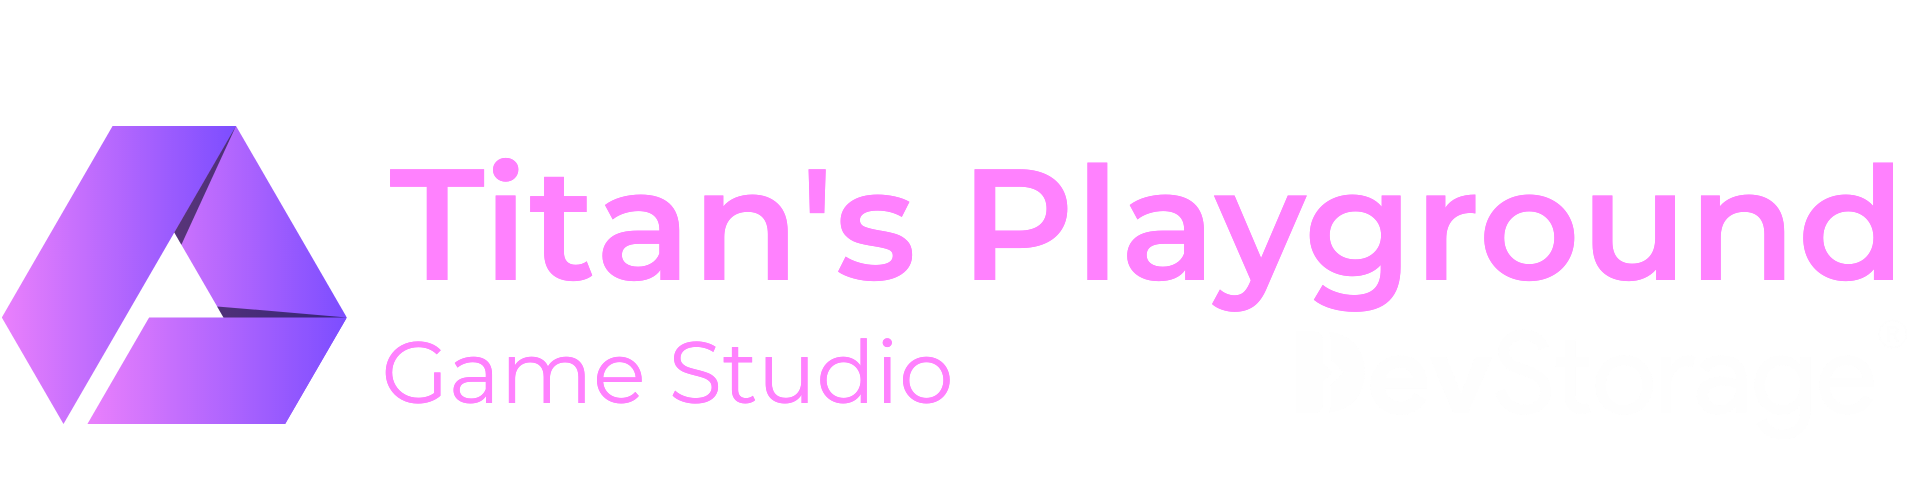 Titan's Playground